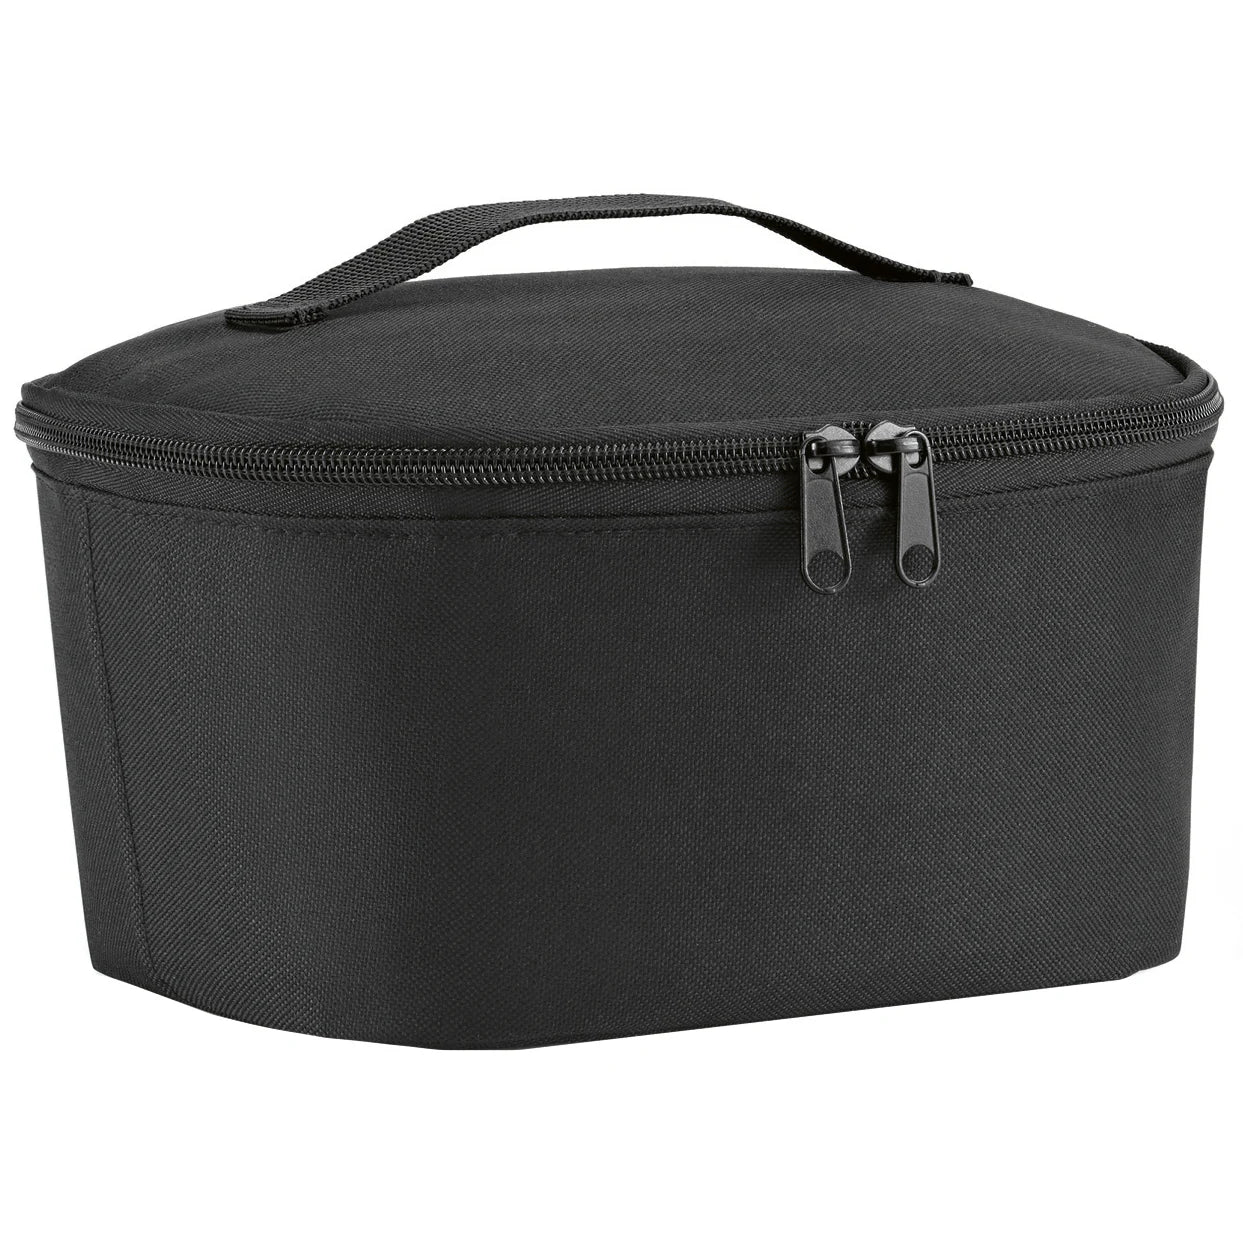 Reisenthel Shopping Coolerbag S Pocket 22 cm - Black